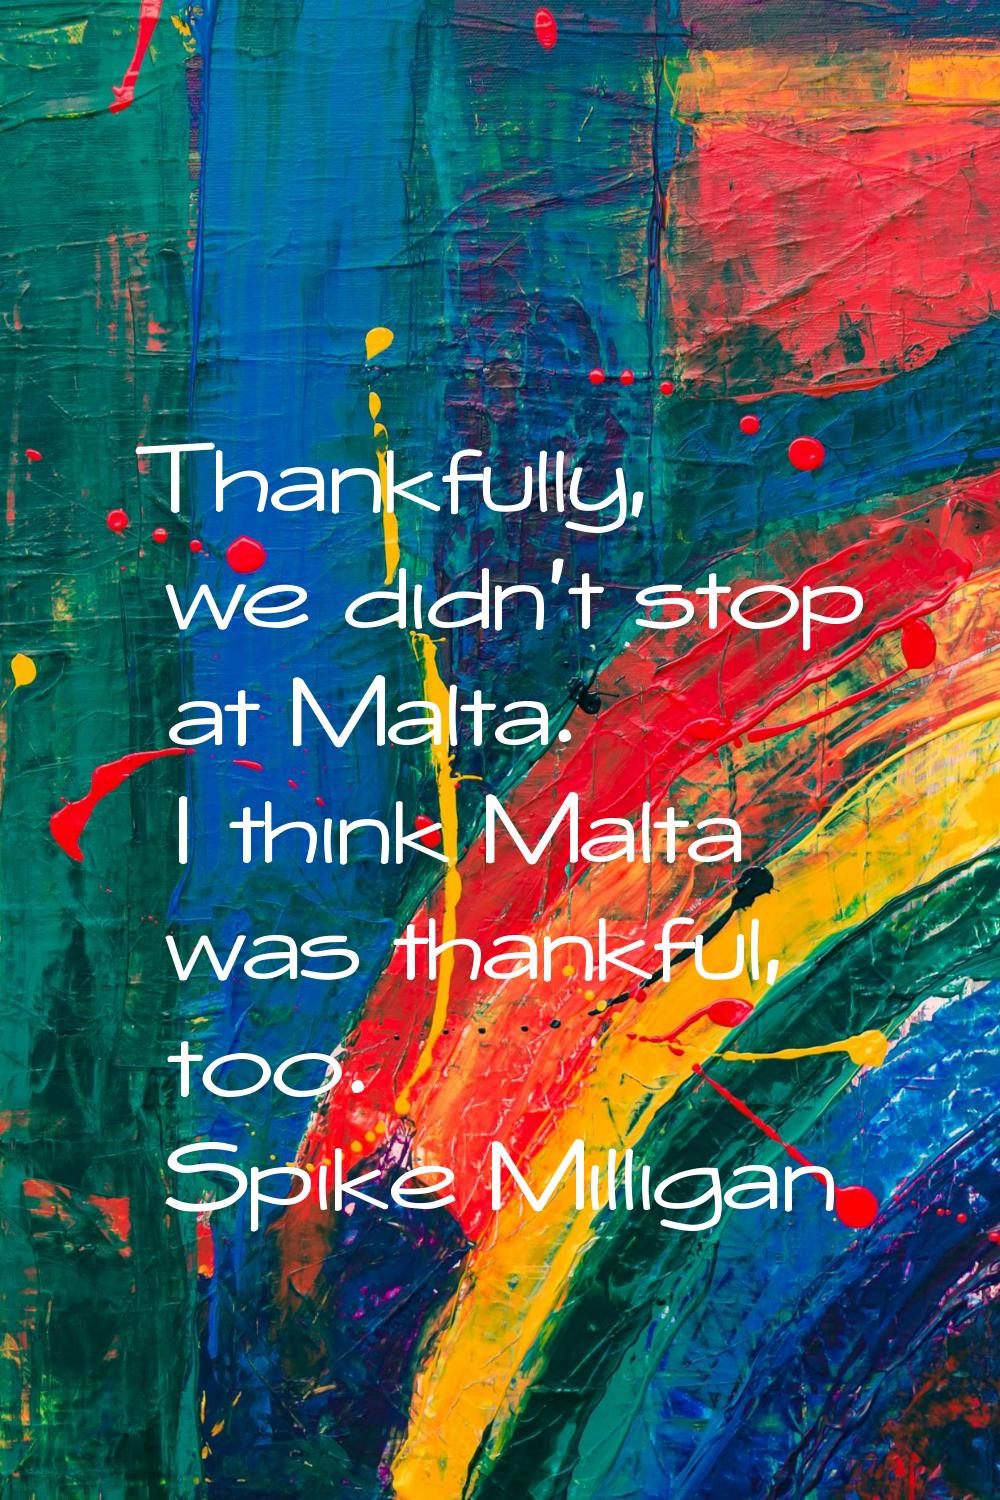 Thankfully, we didn't stop at Malta. I think Malta was thankful, too.